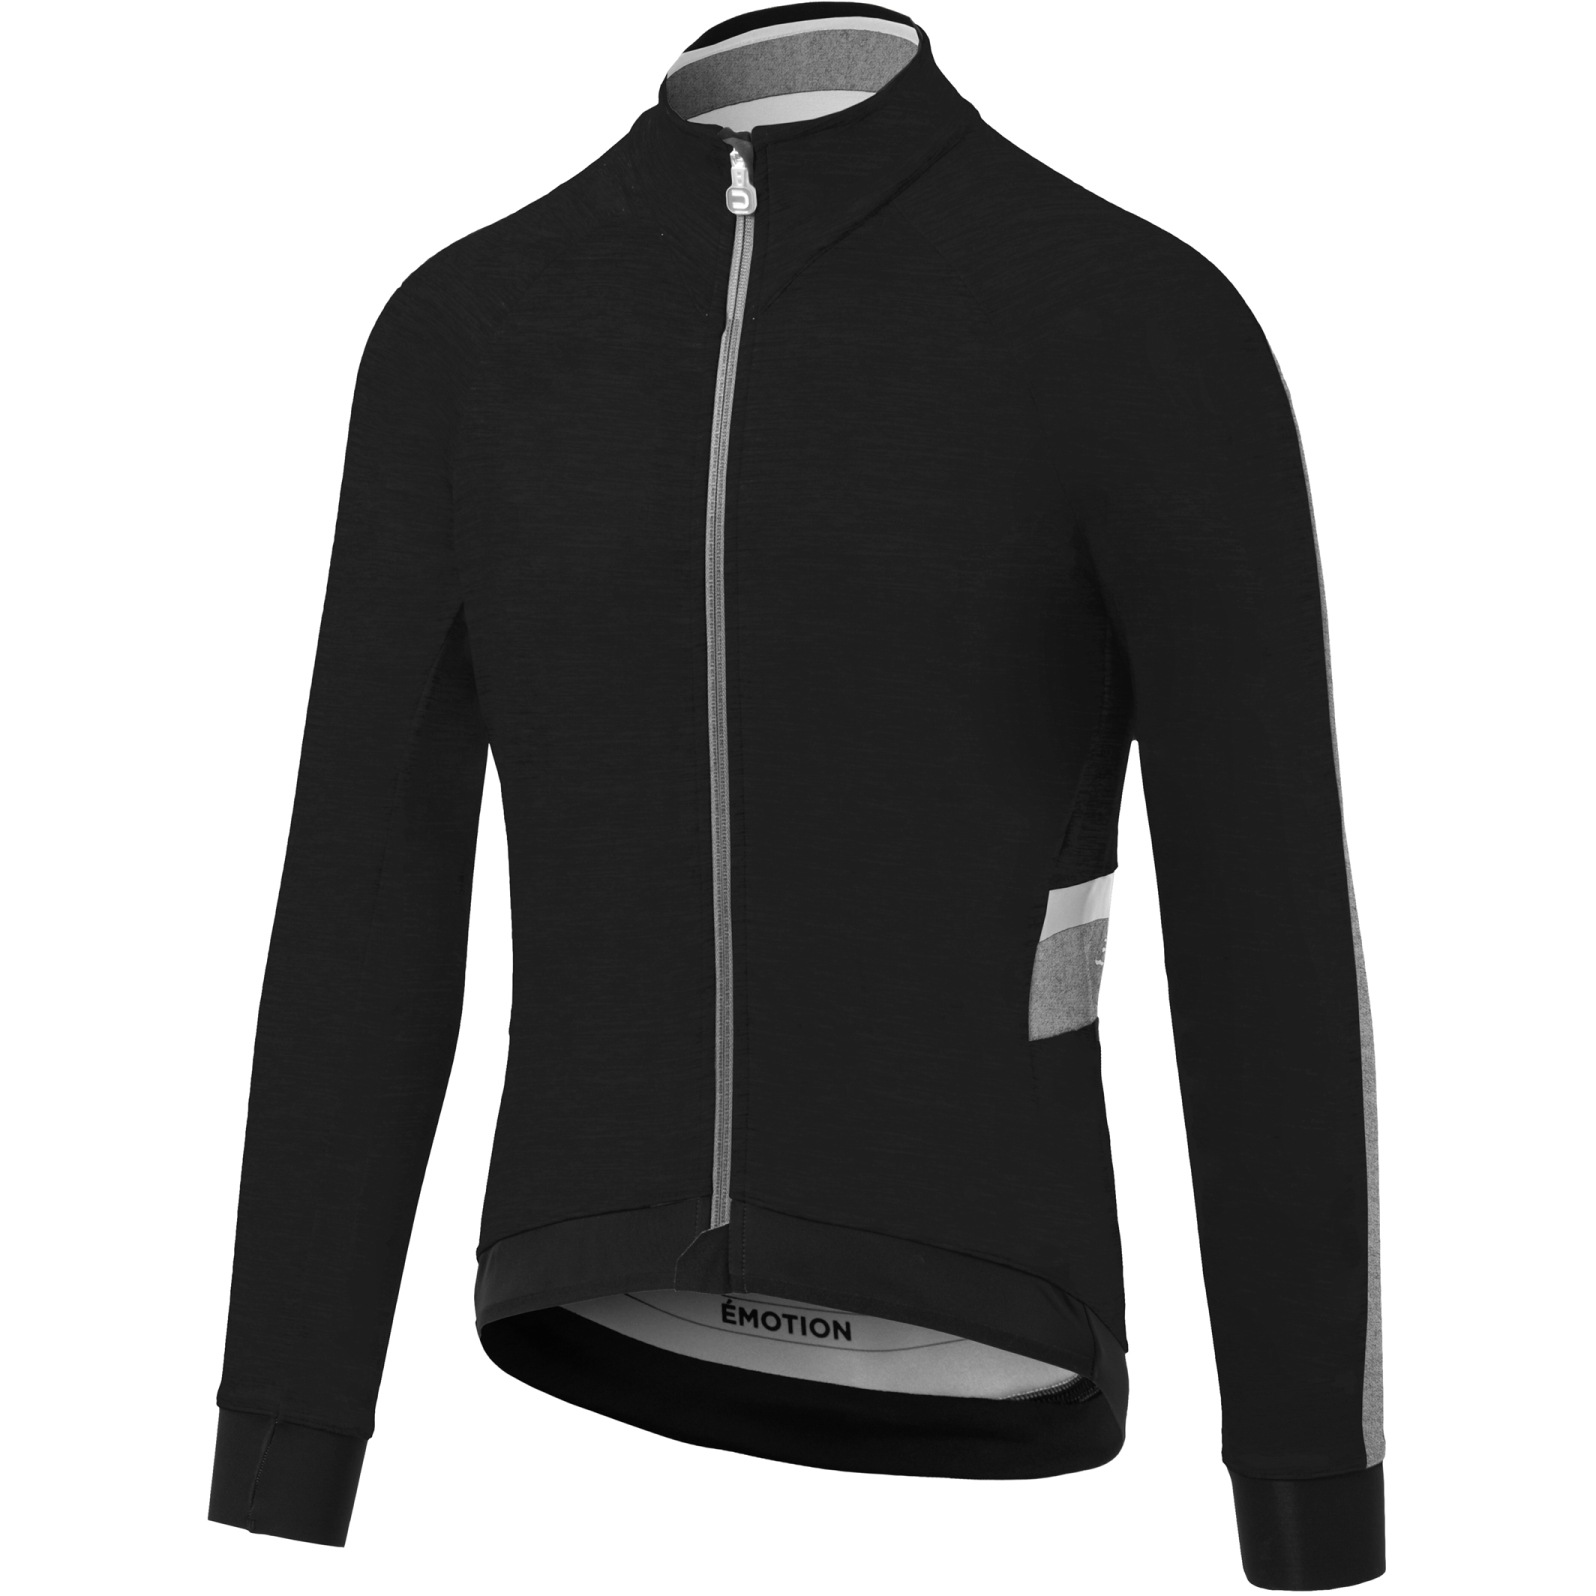 Image of Dotout Le Maillot Cycling Jacket Men A20M530 - black-melange light grey